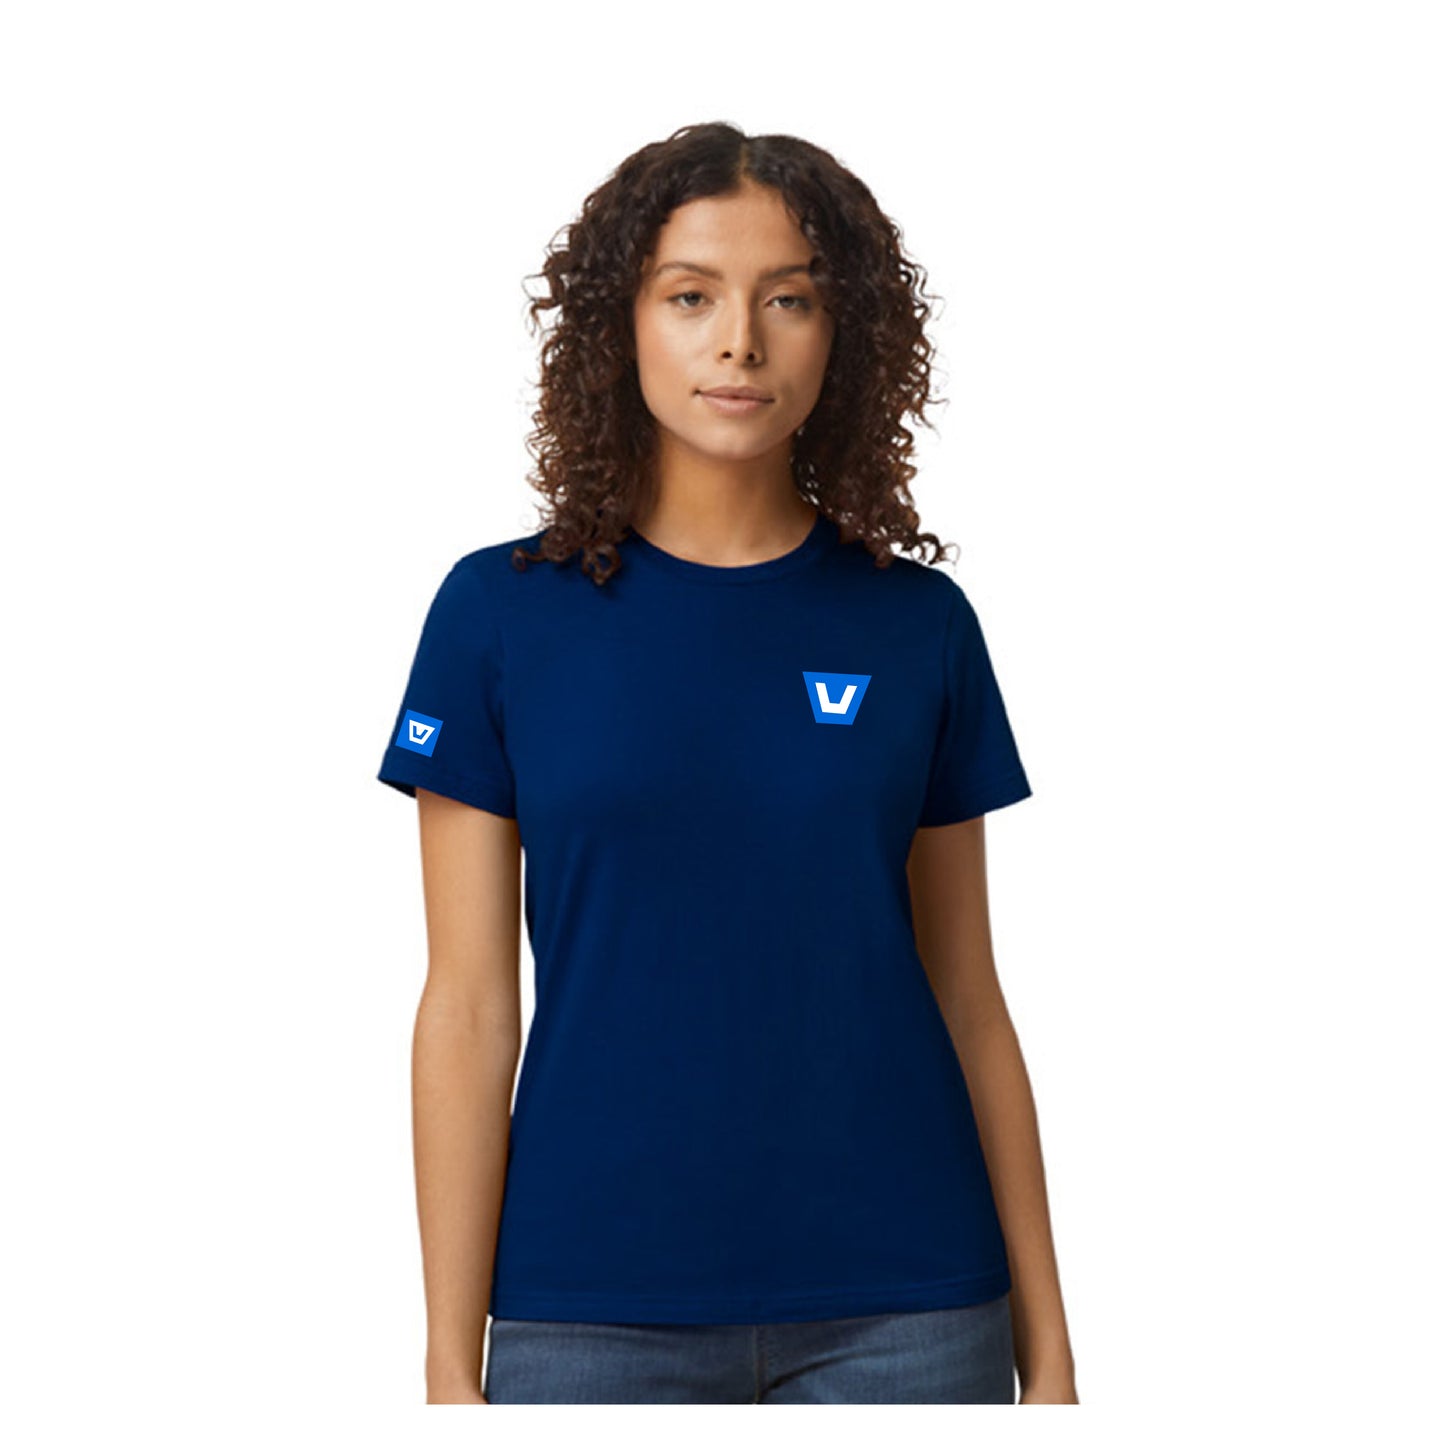 Marine Force ® Aqua Cotton T-Shirt